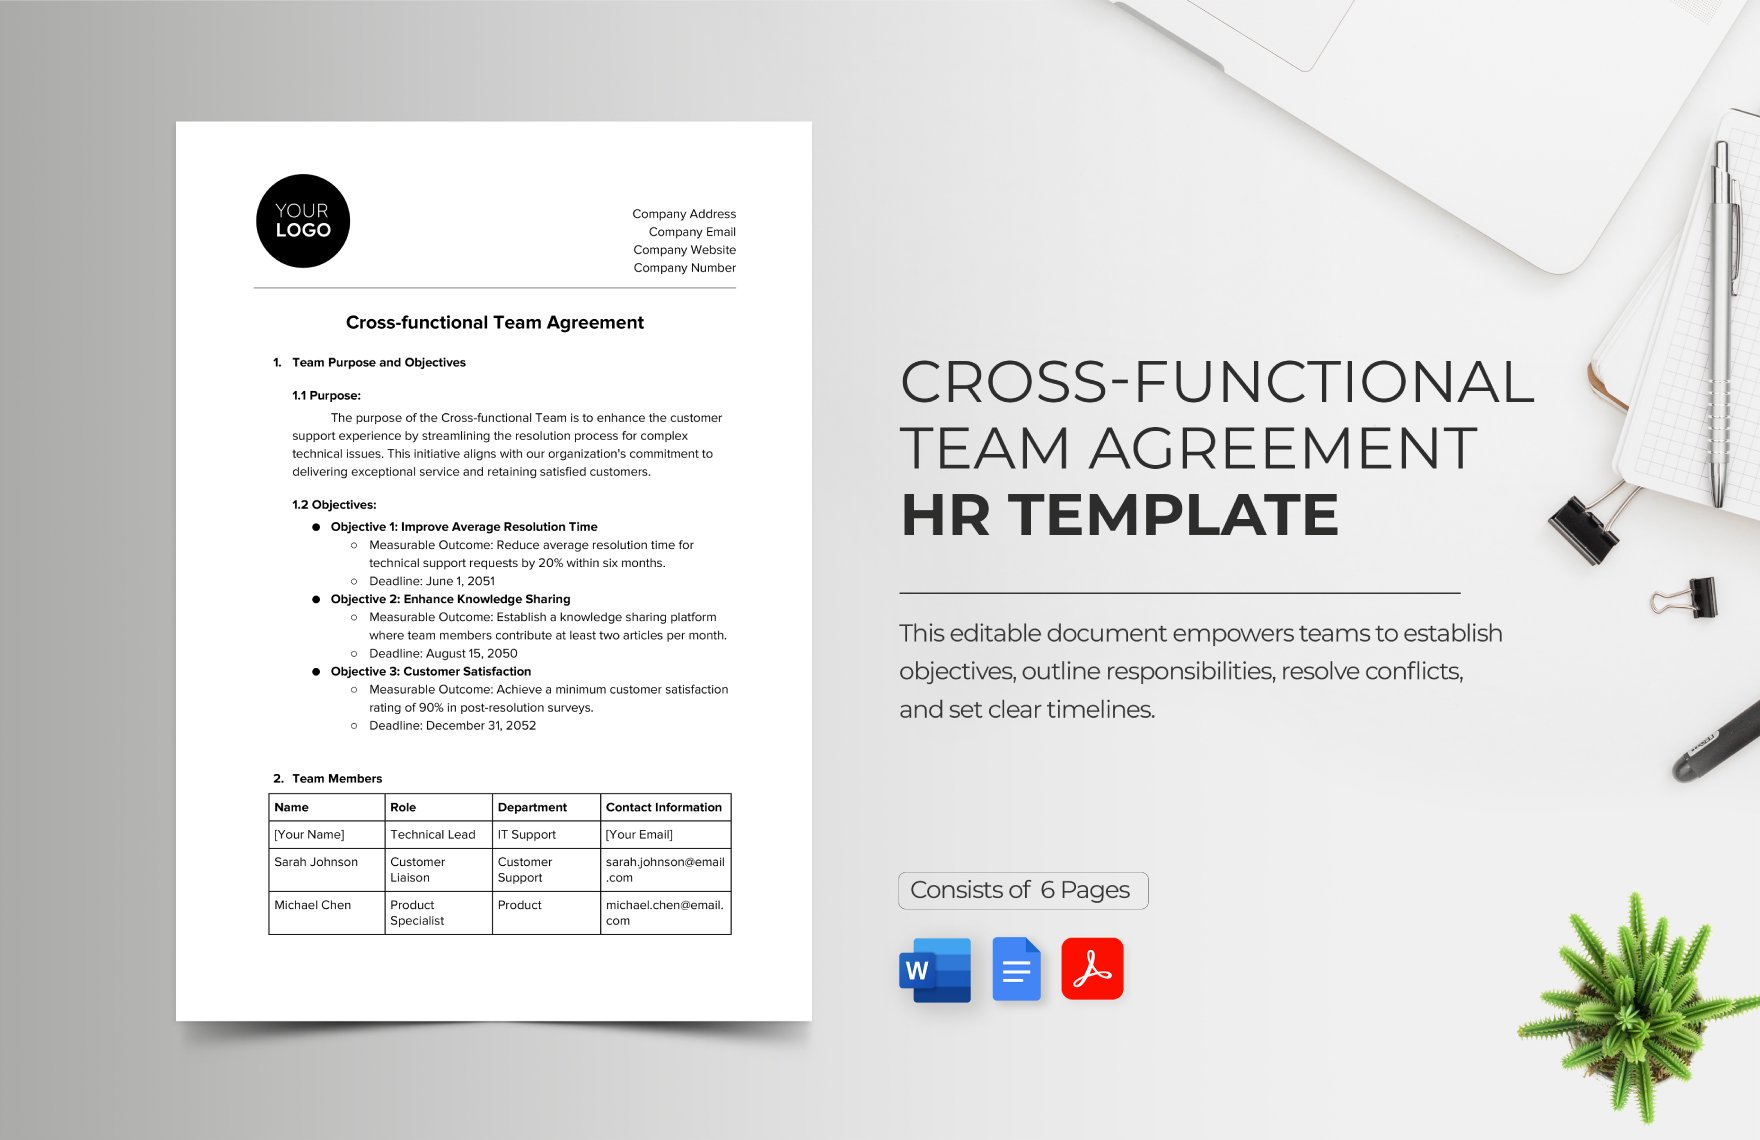 Cross-functional Team Agreement HR Template